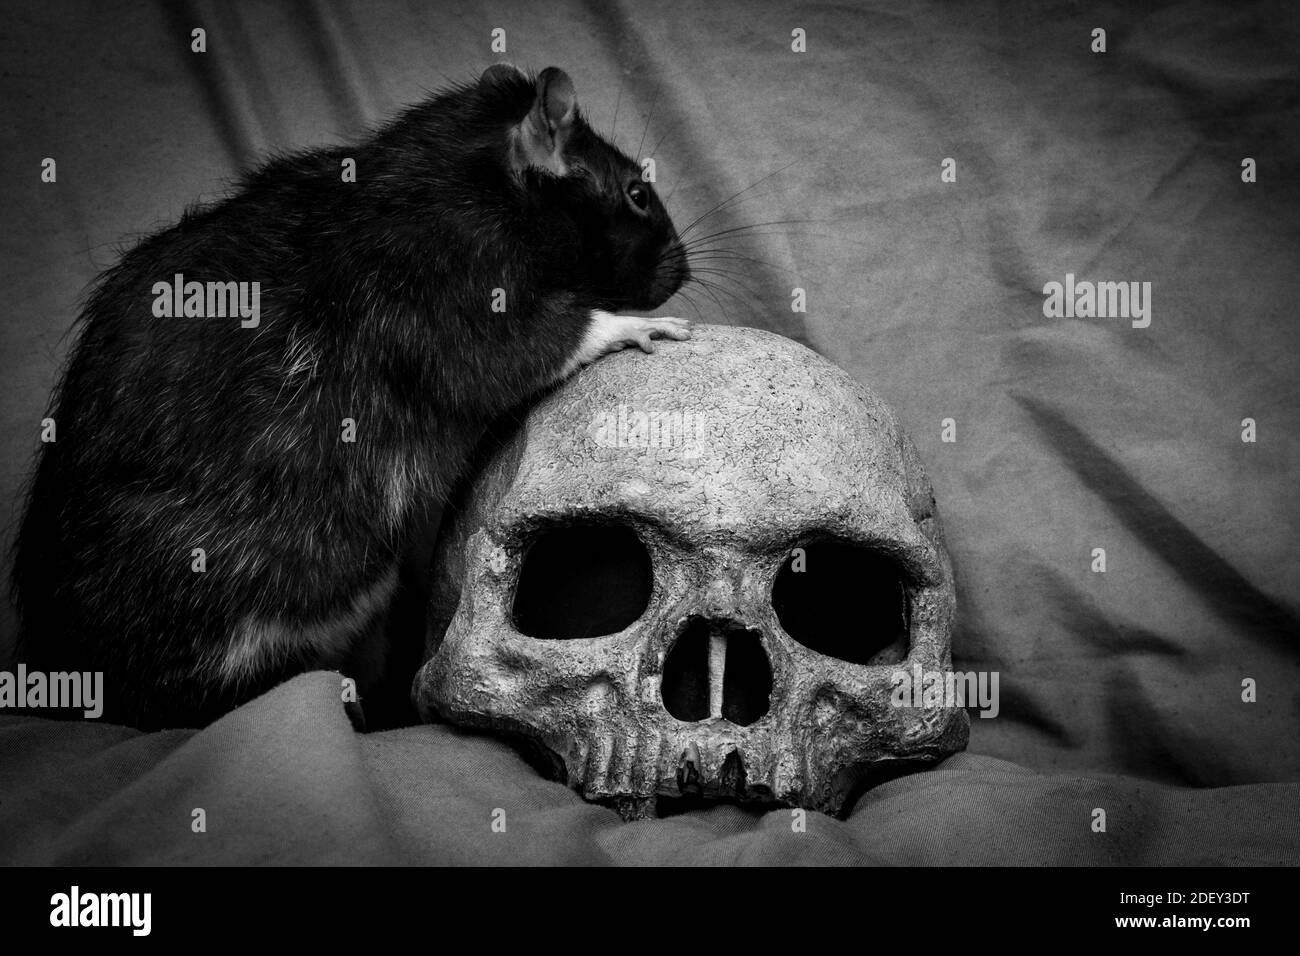 Pet rat playing near old decayed human skull as plague concept Stock Photo